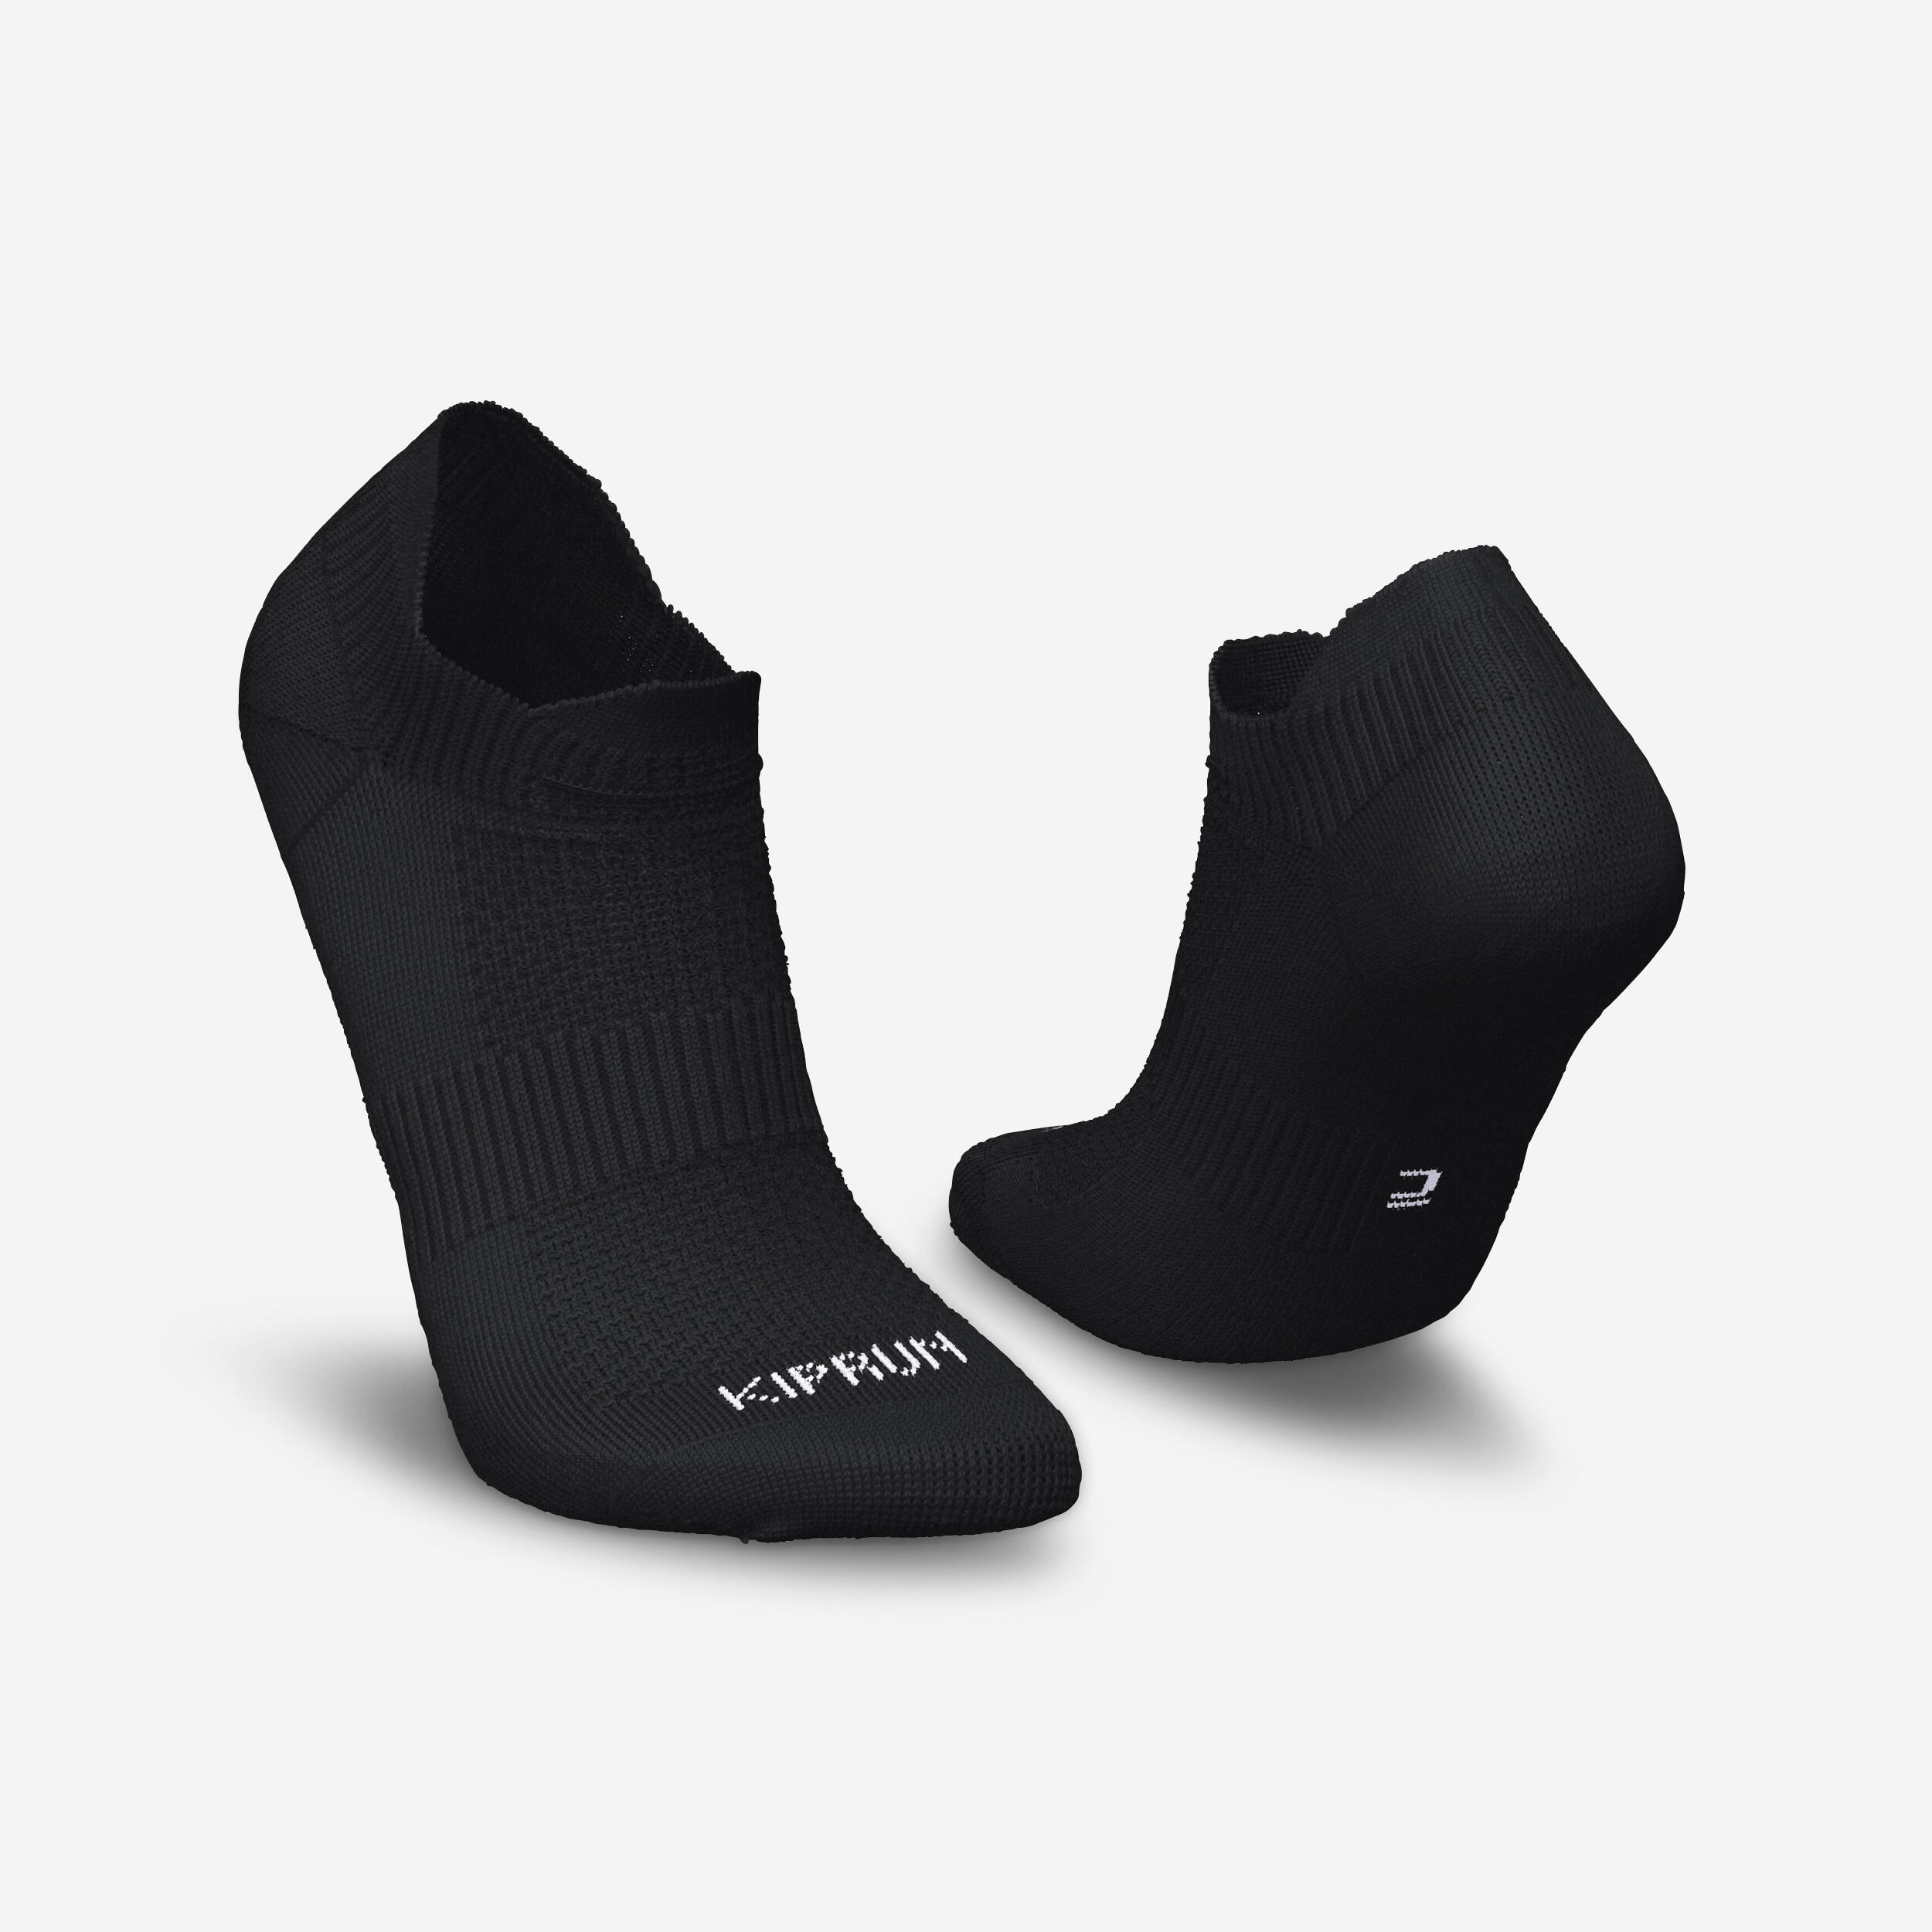 Non-slip Socks Homepad (Black)